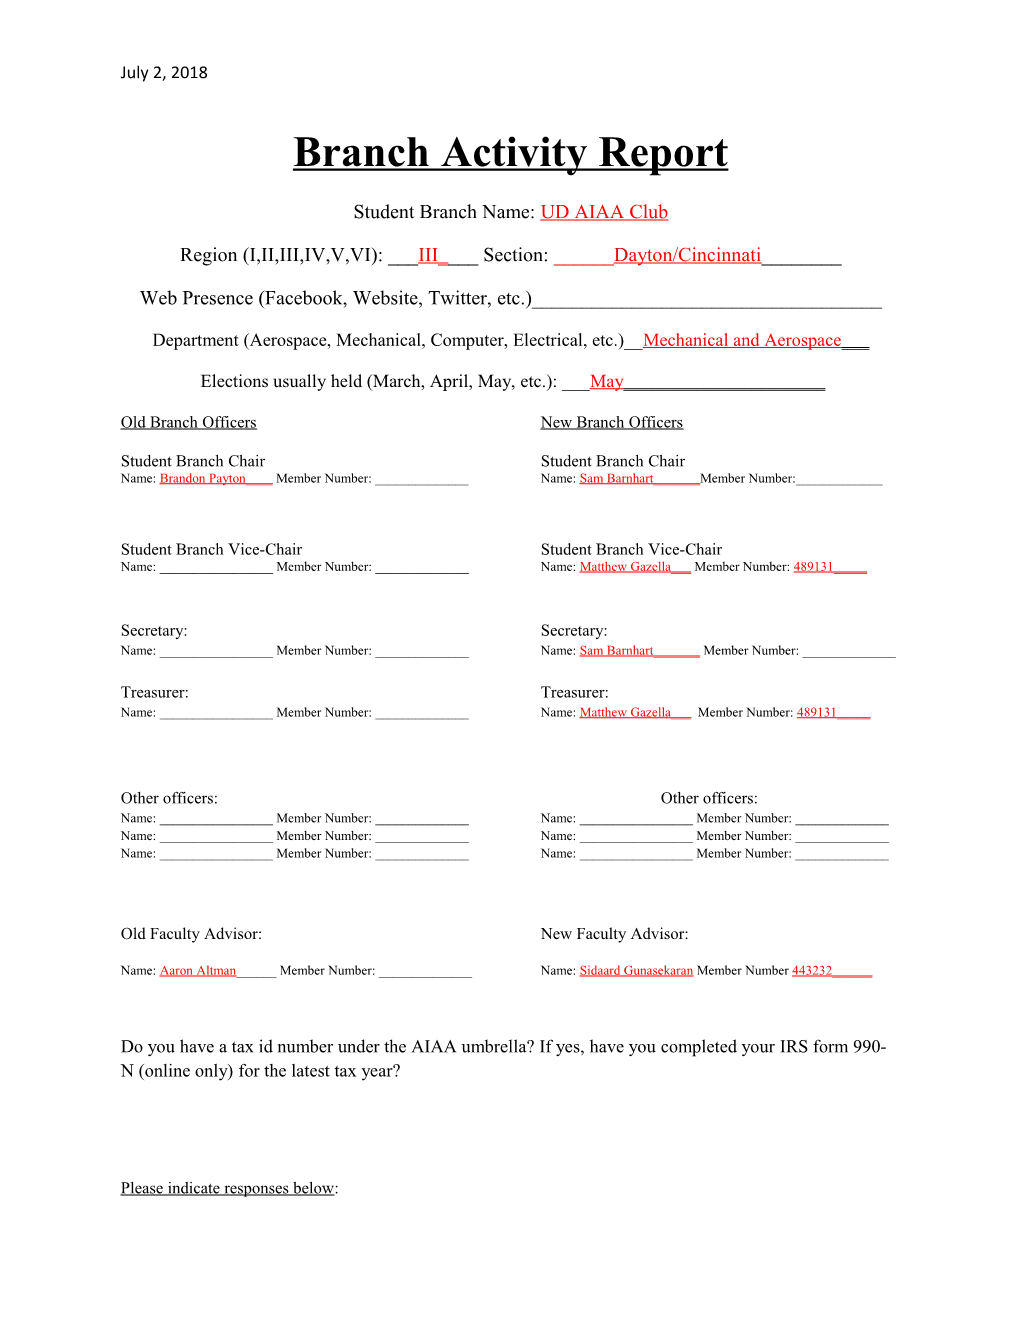 Branch Activity Report s2